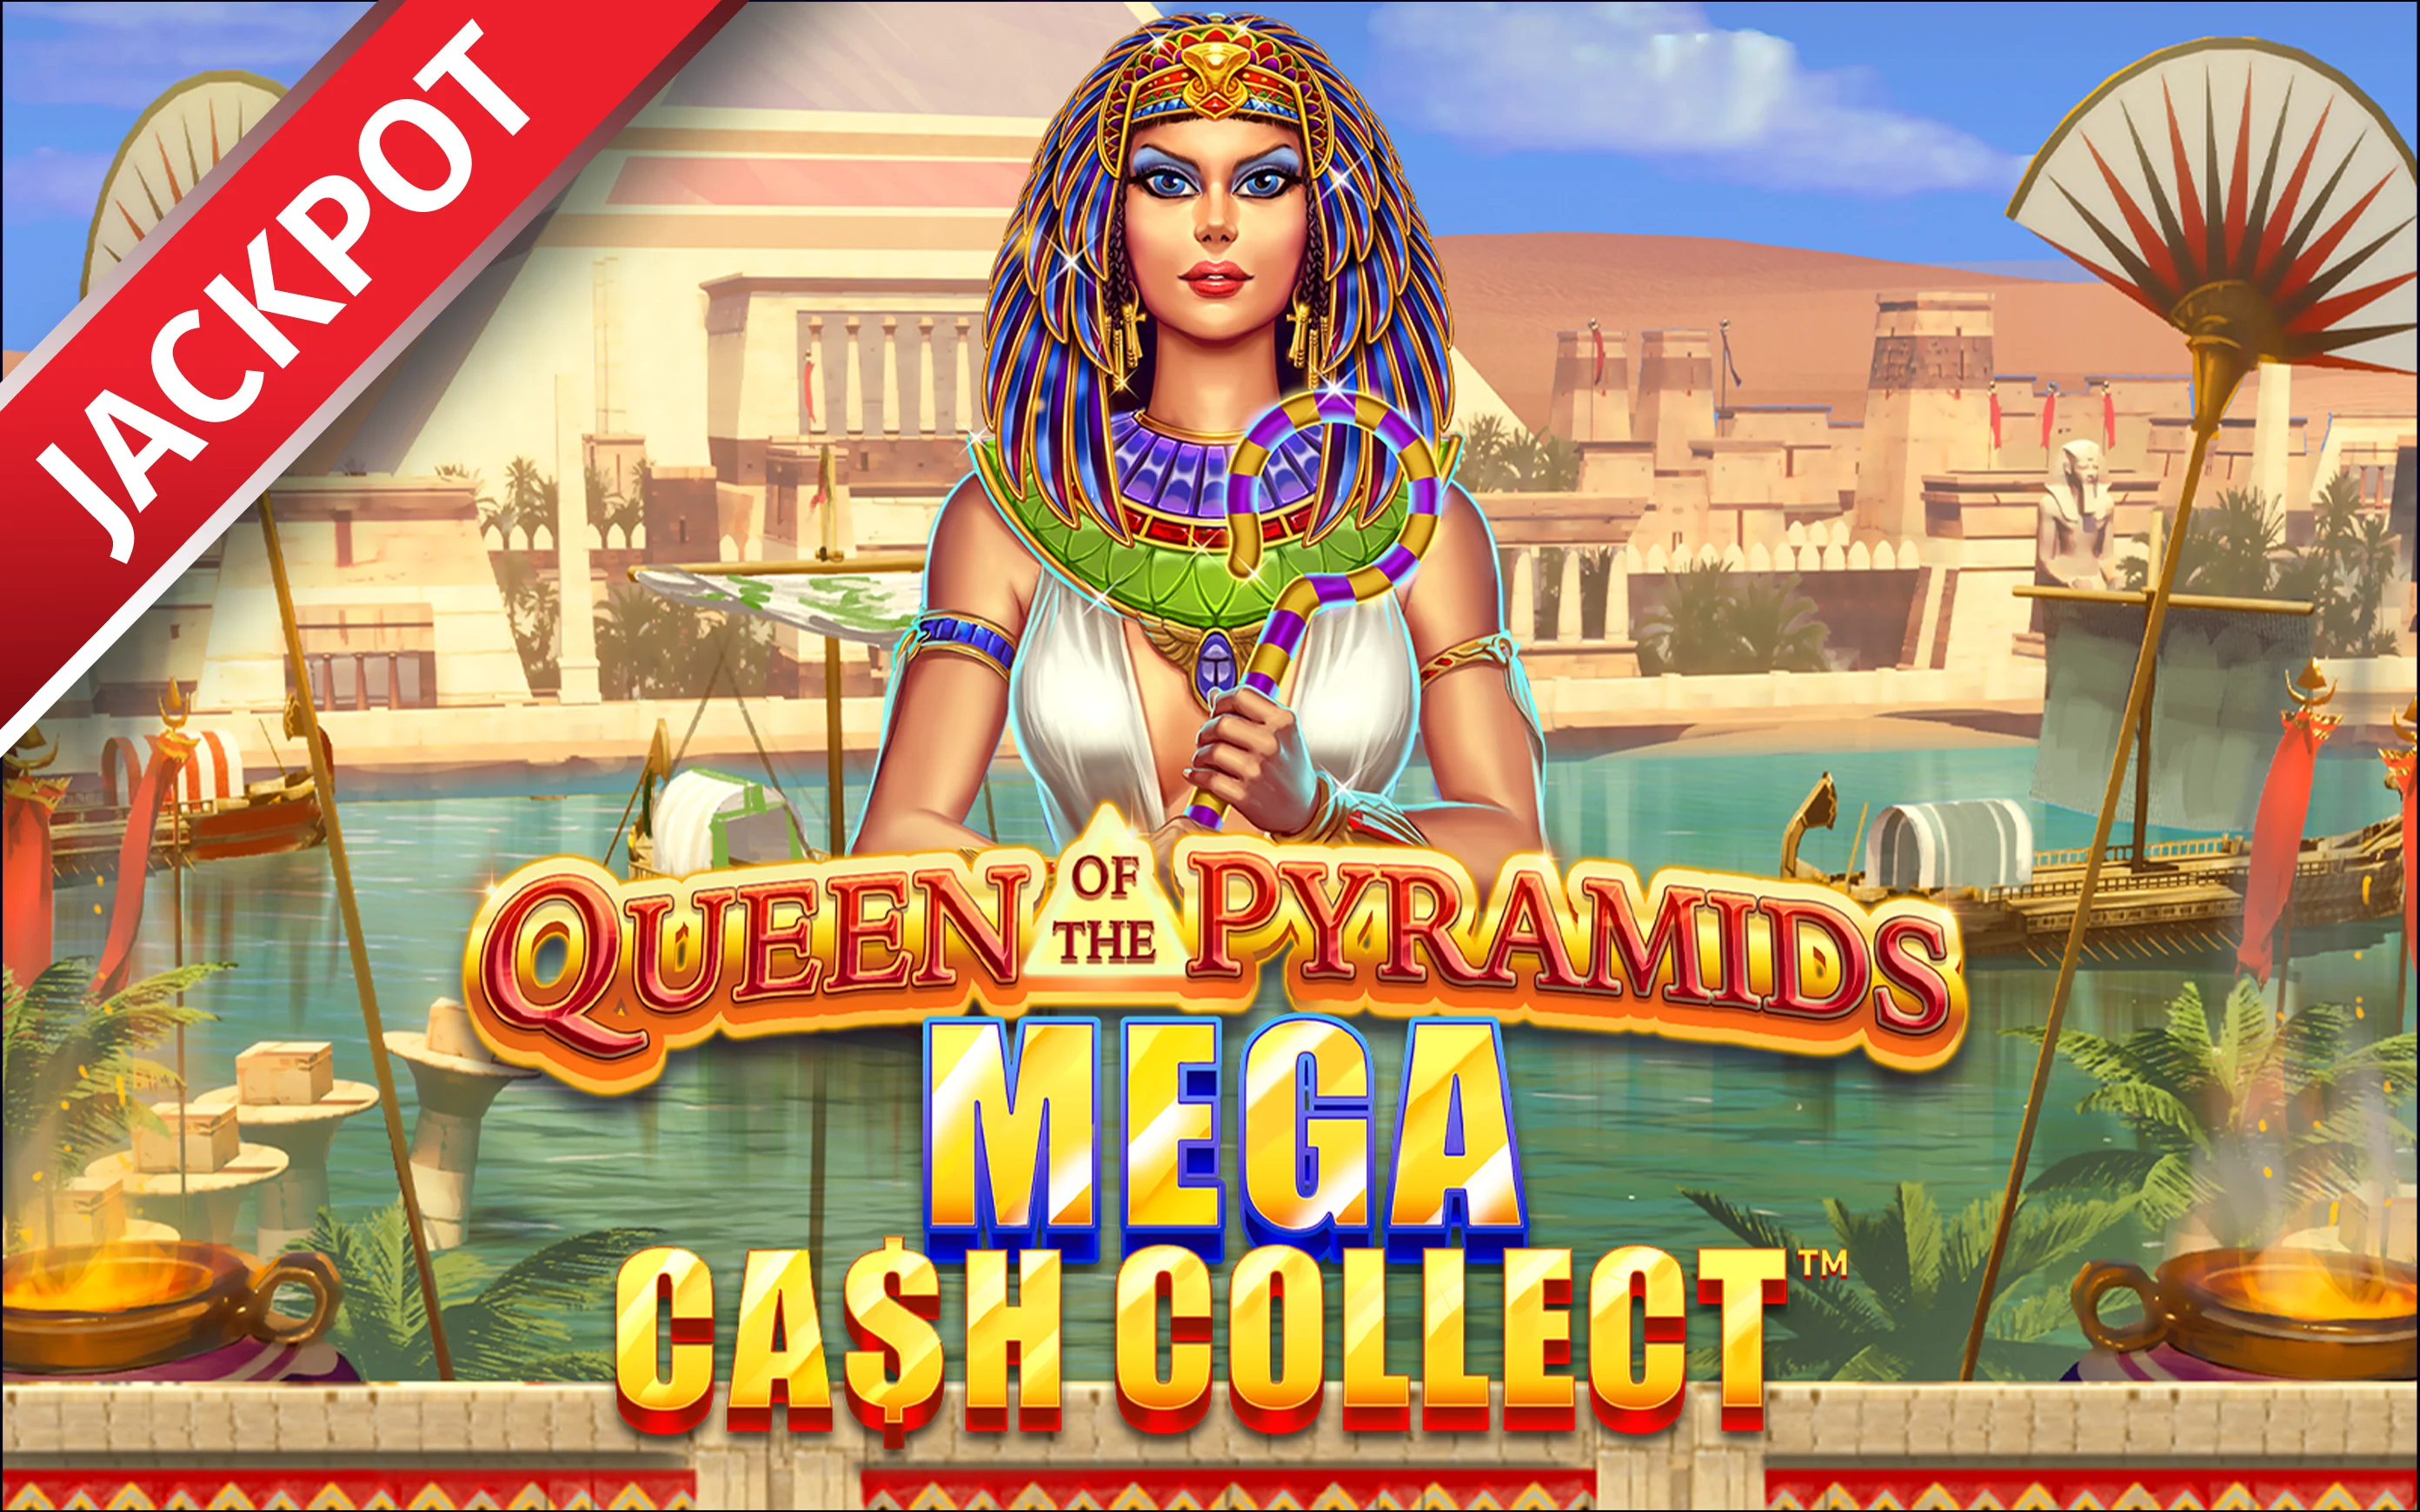 Speel Queen of the Pyramids: Mega Cash Collect™ op Starcasino.be online casino